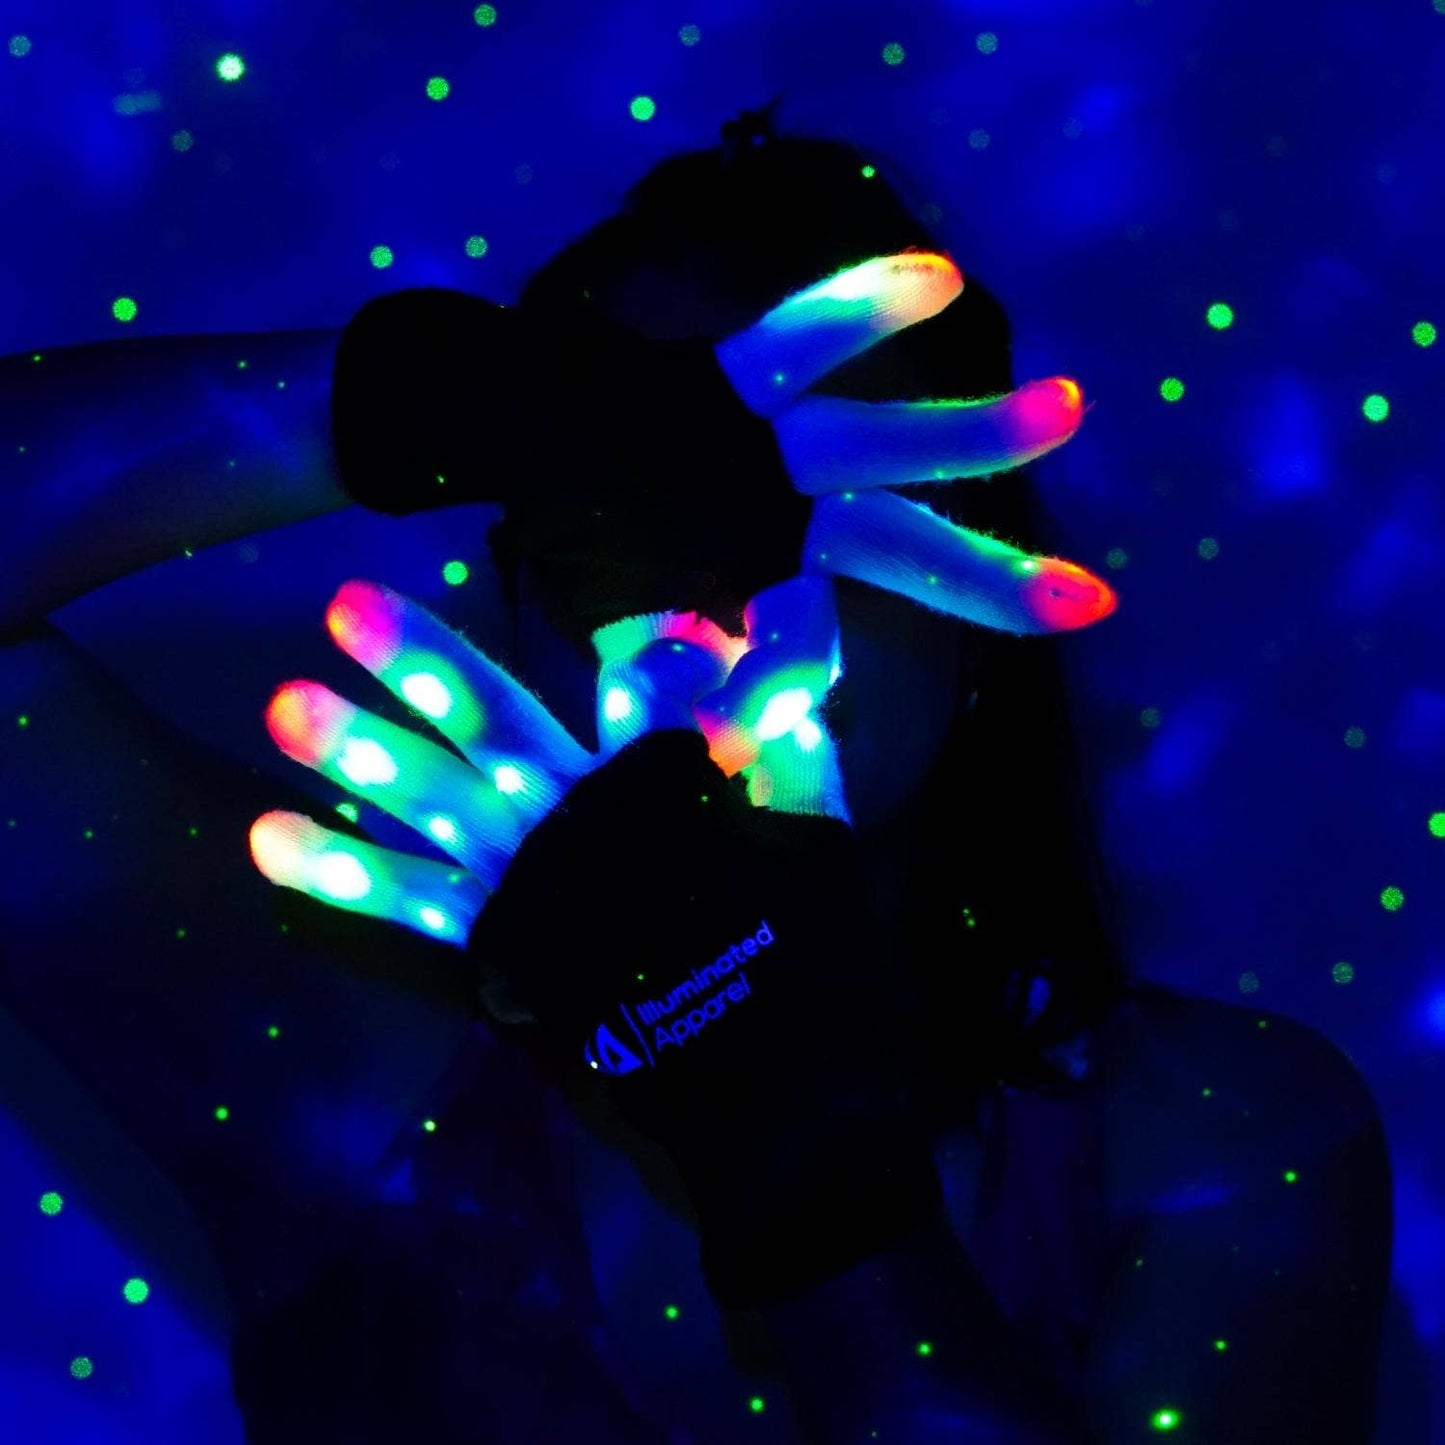 Illuminated Apparel - Kids LED Light Up Gloves: 4-7 Years Old